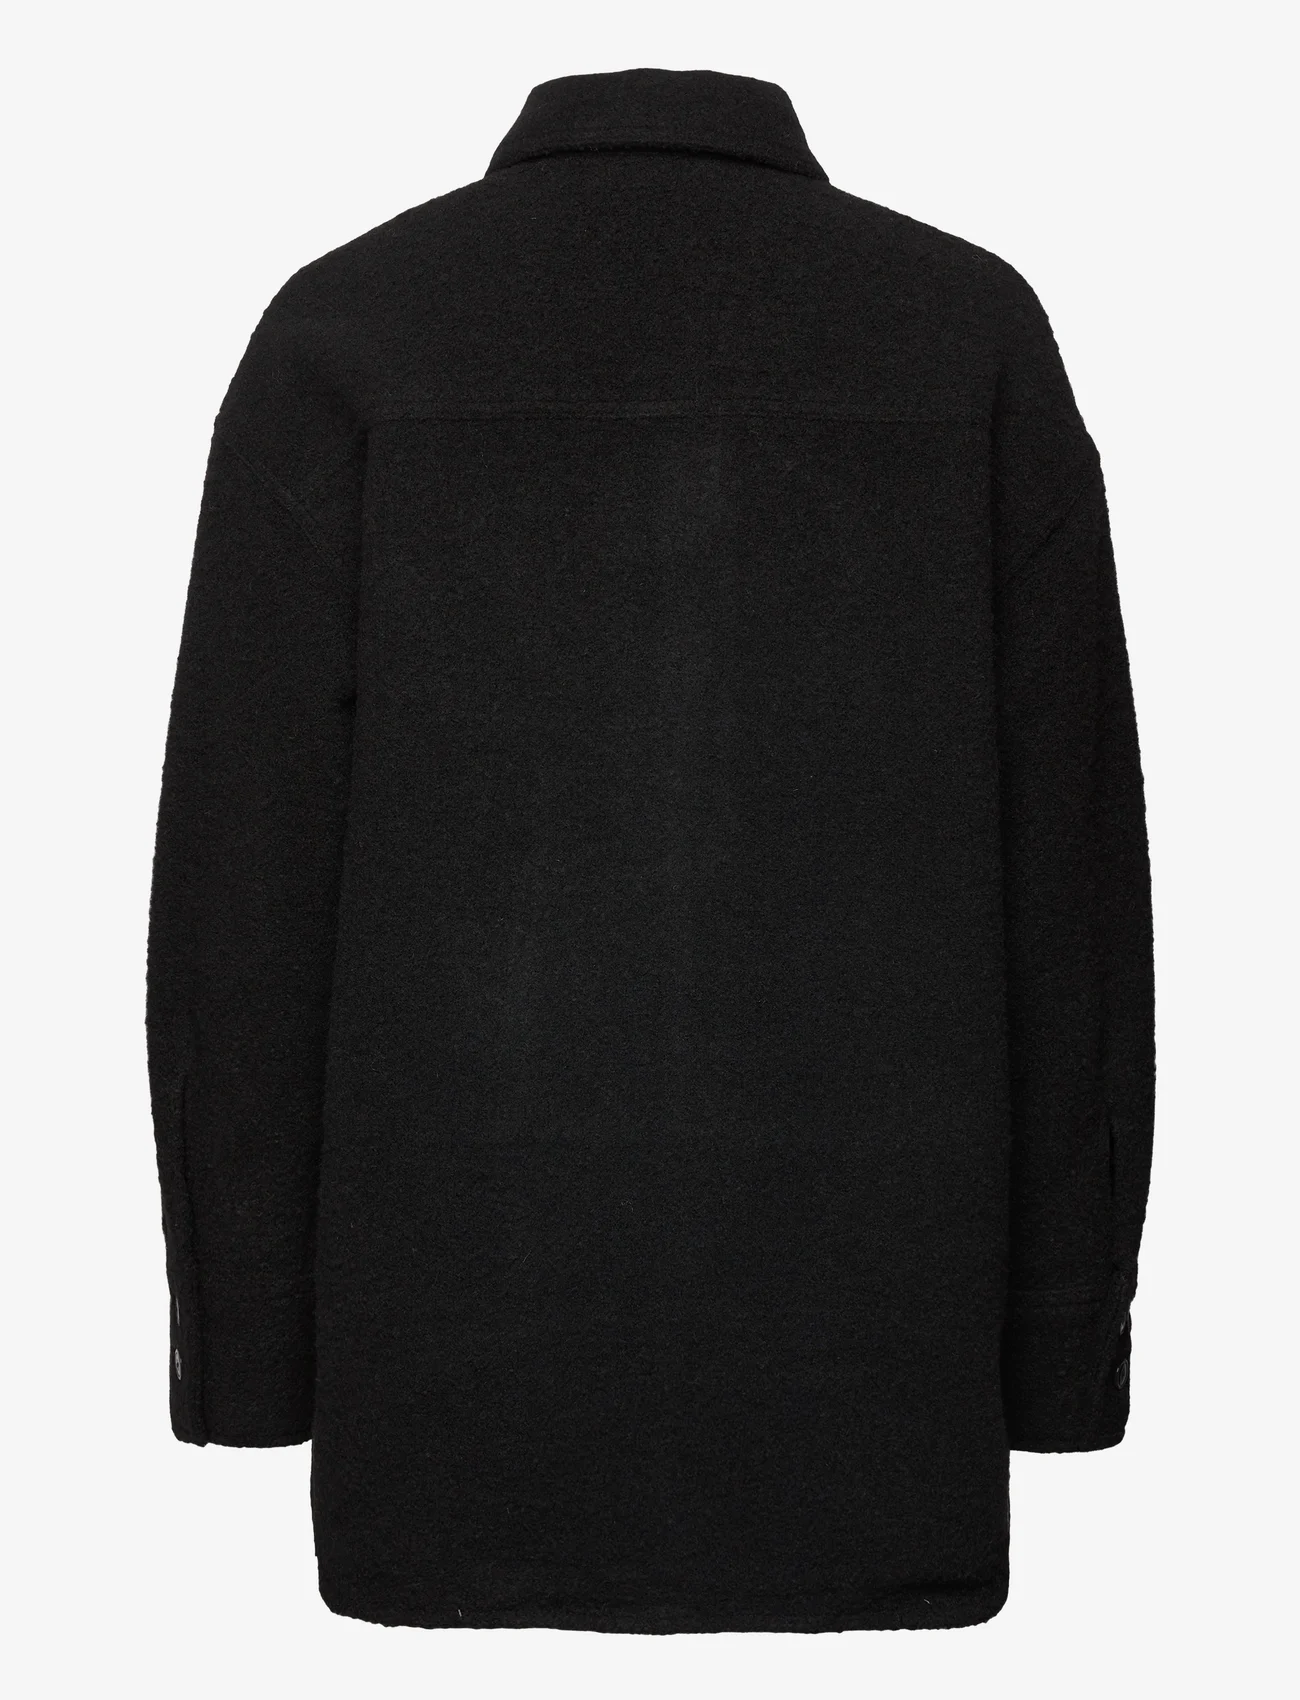 Samsøe Samsøe - Inez shirt 15047 - nordischer stil - black - 1